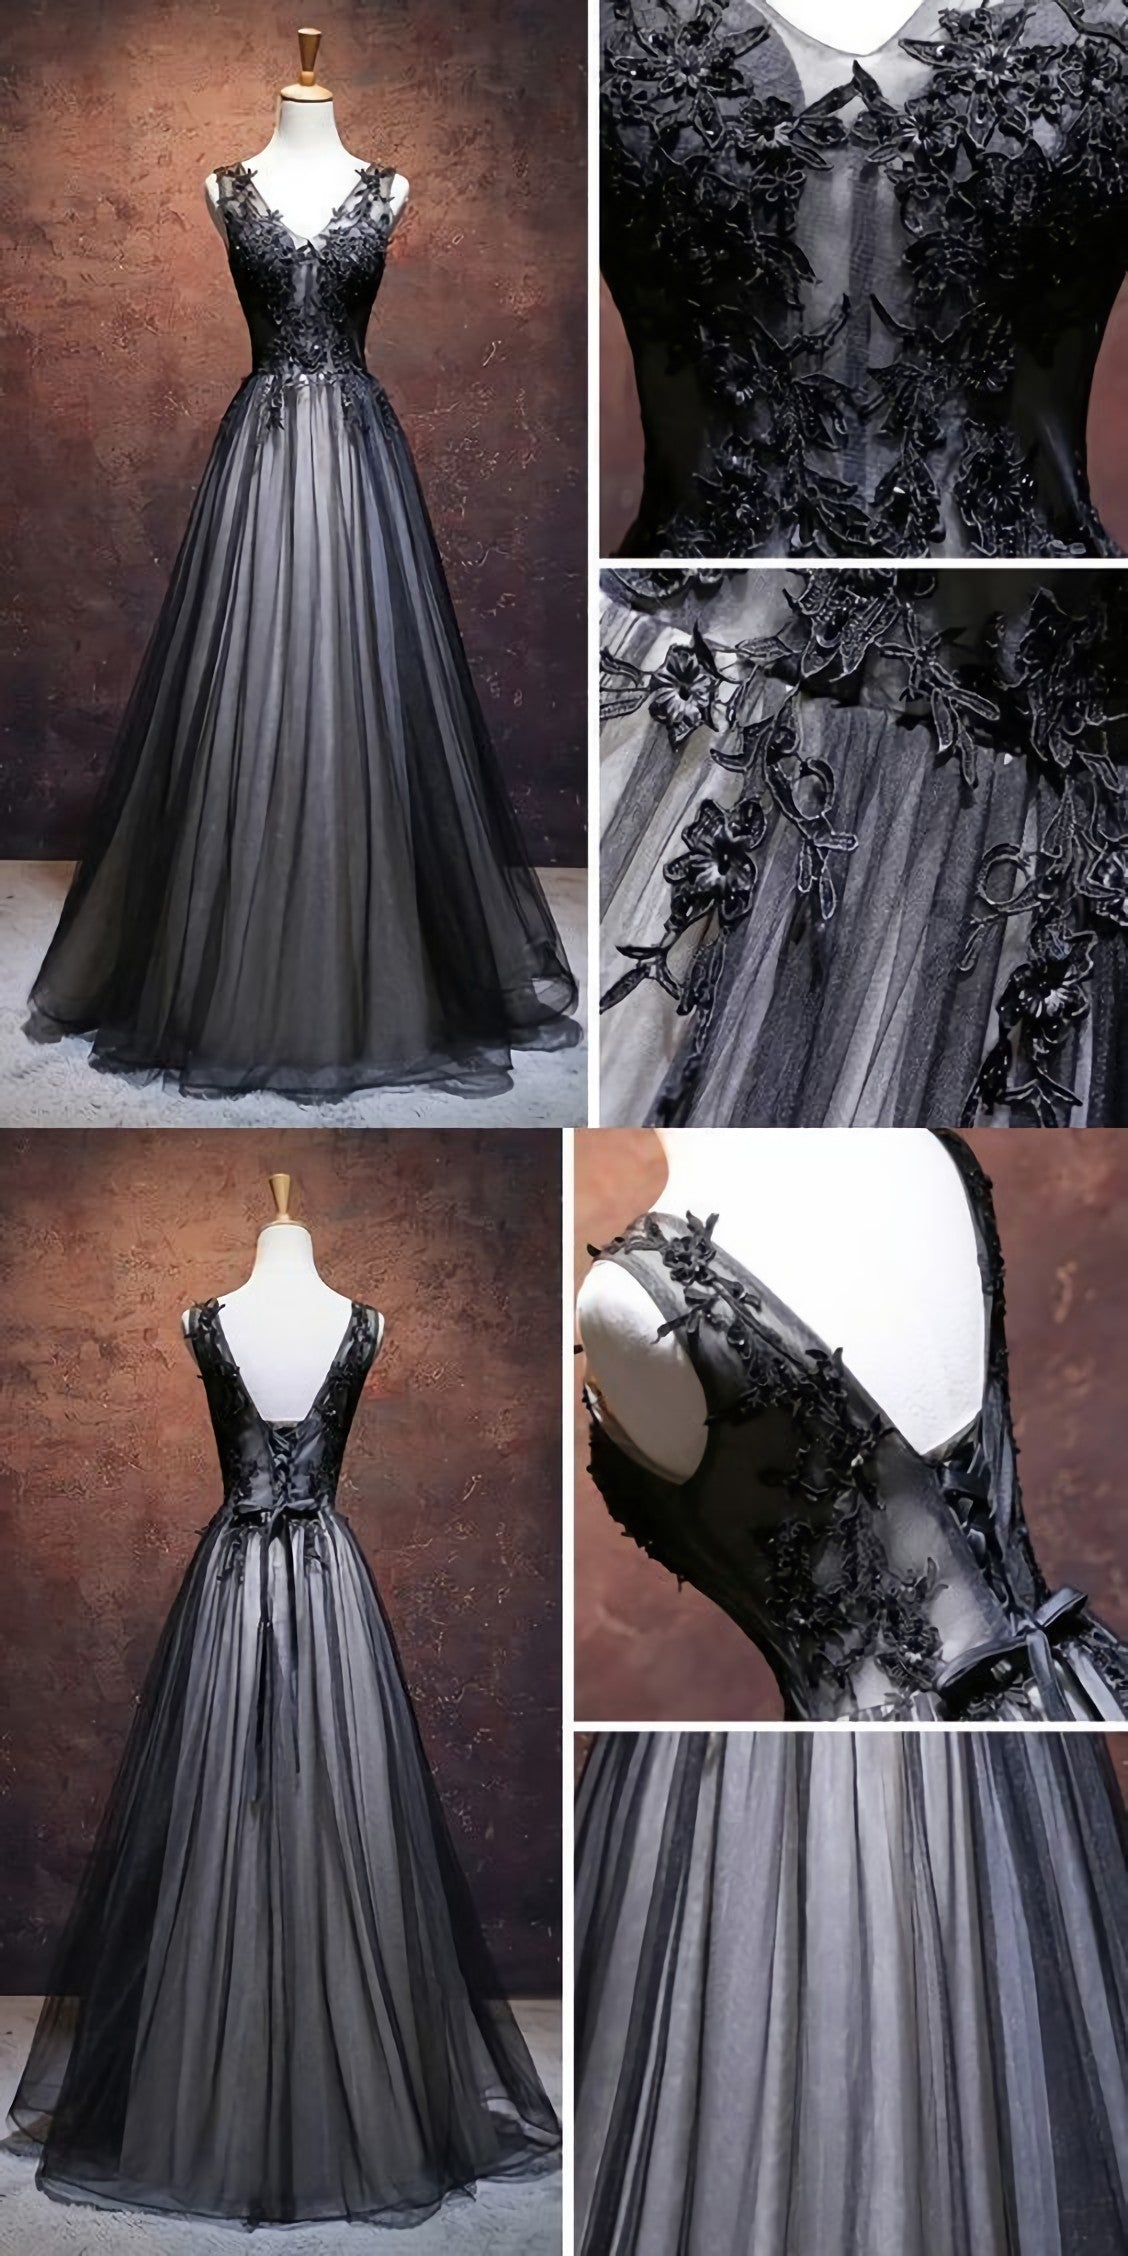 Prom Dress Design, Chic A Line V Neck Floor Length Tulle Black Applique Long Prom Dress, Evening Dress